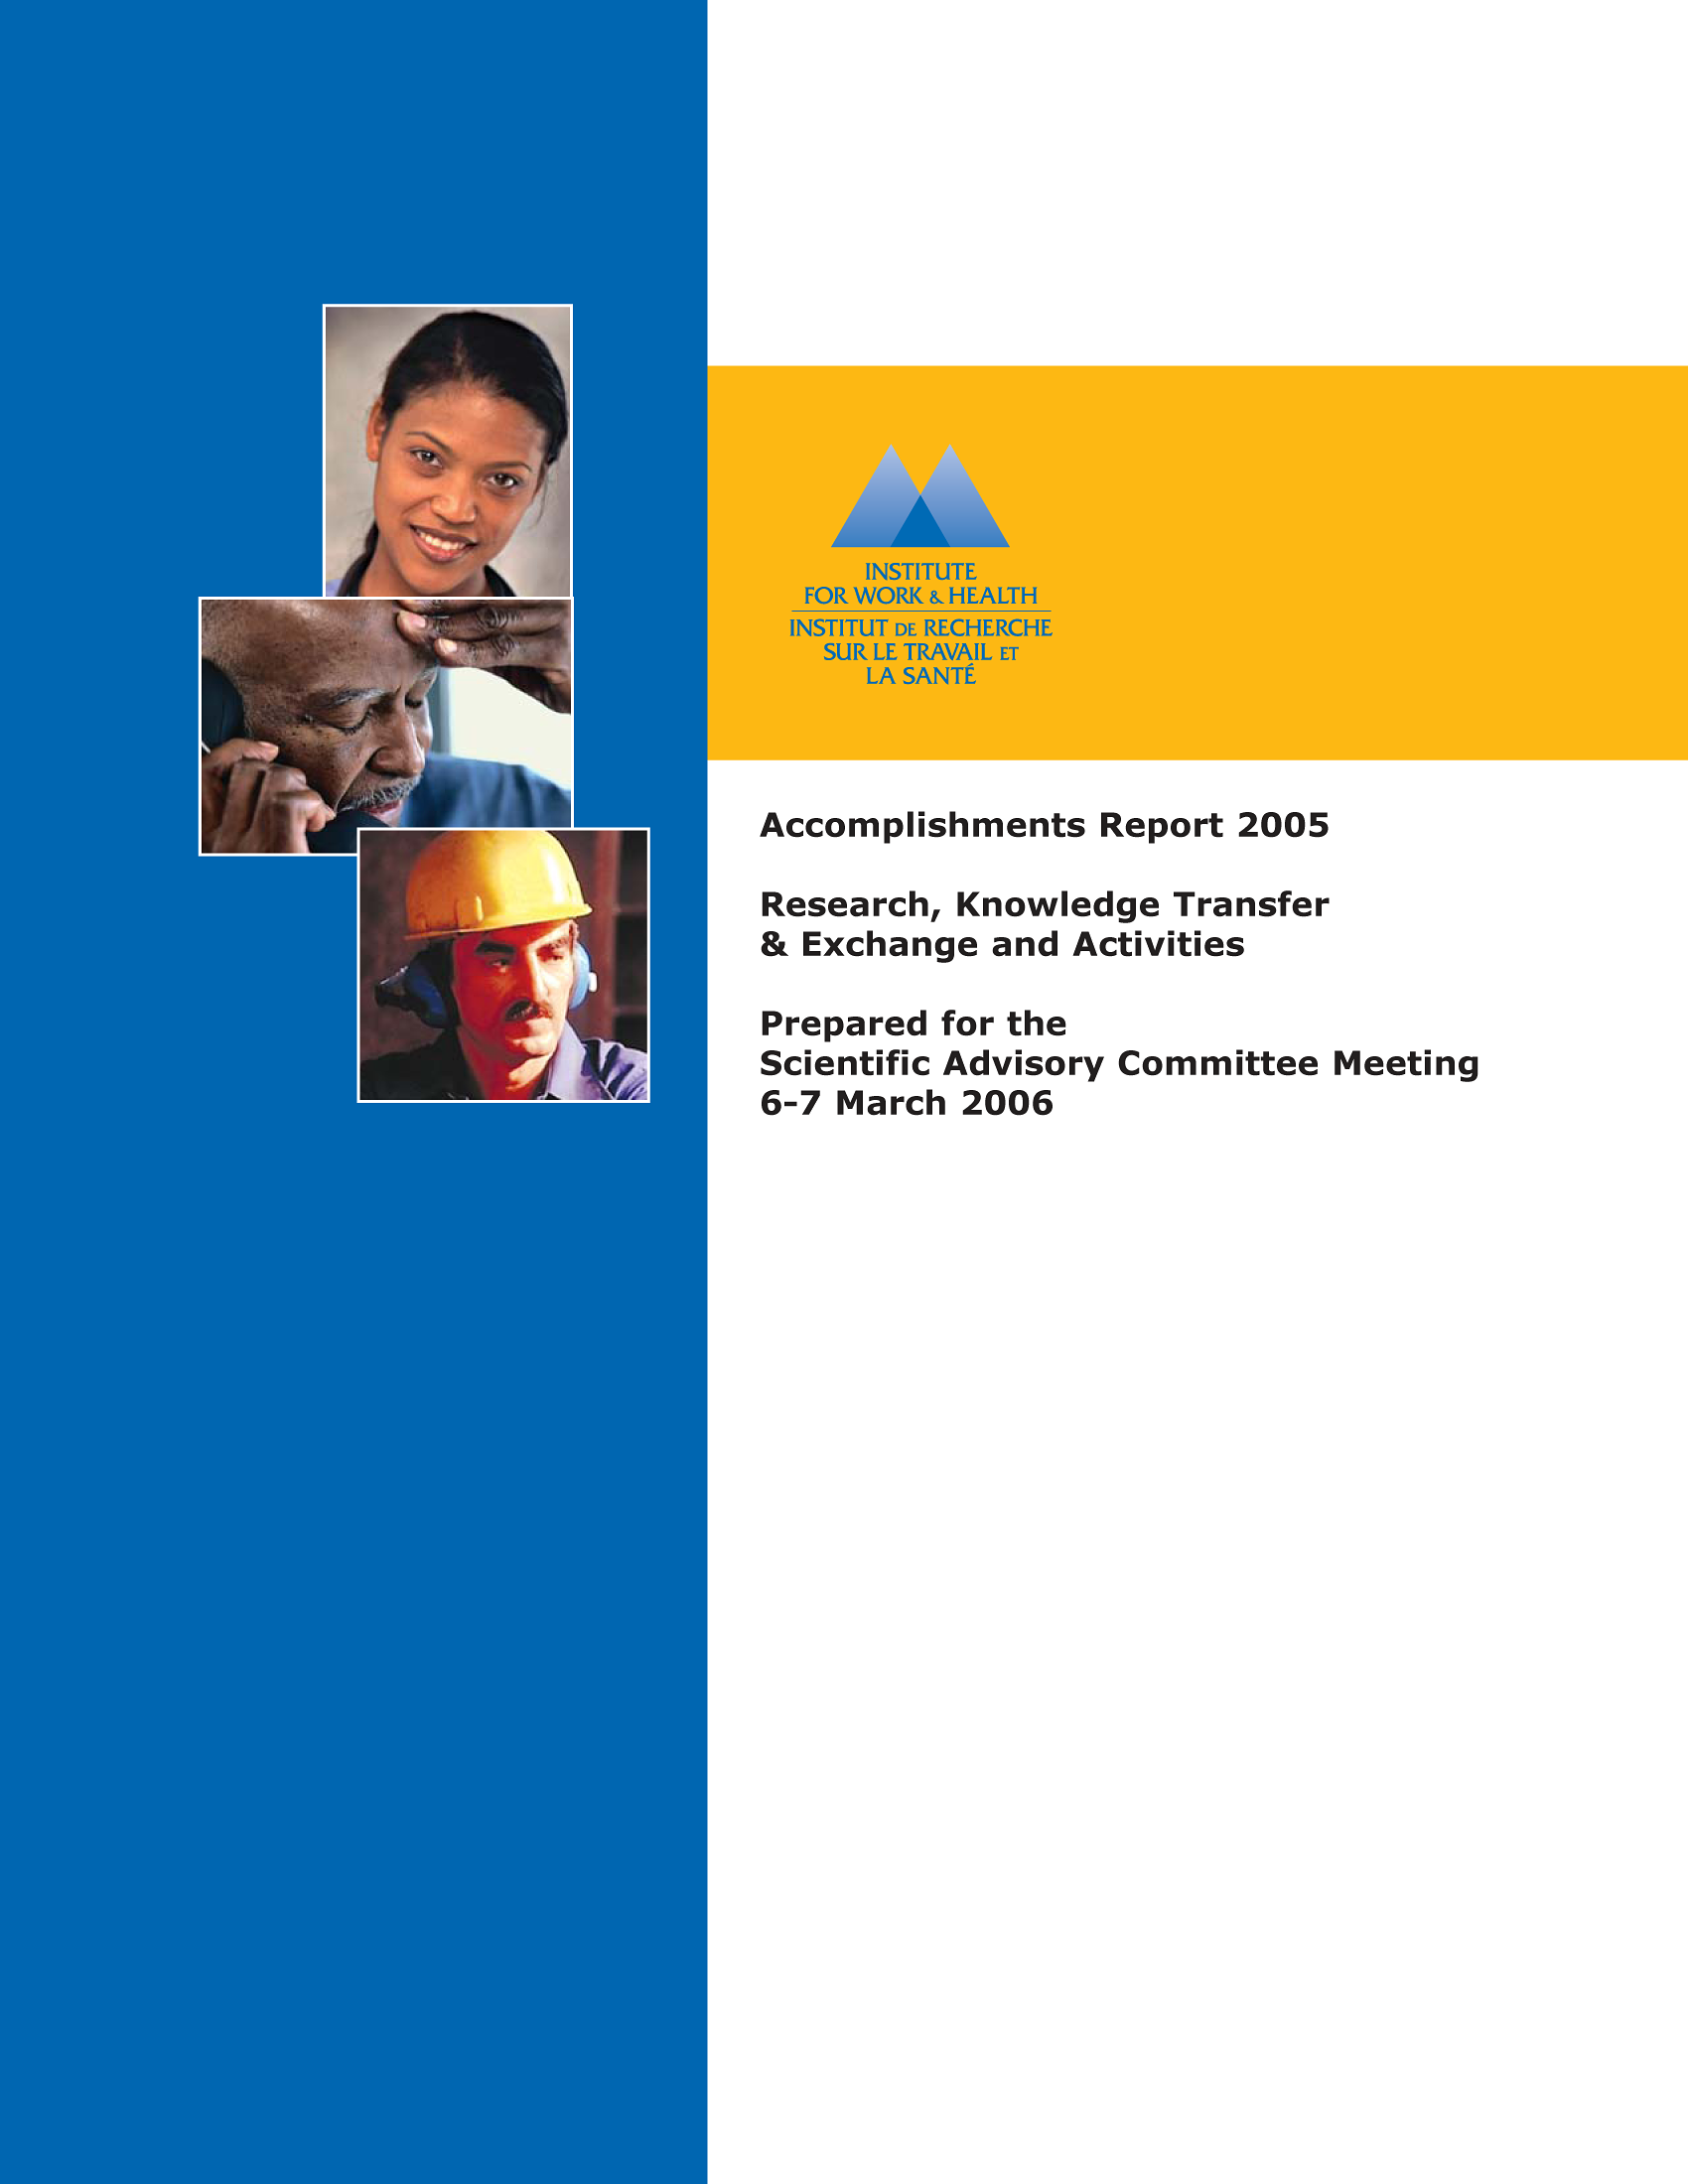 Accomplishments report 2005 cover